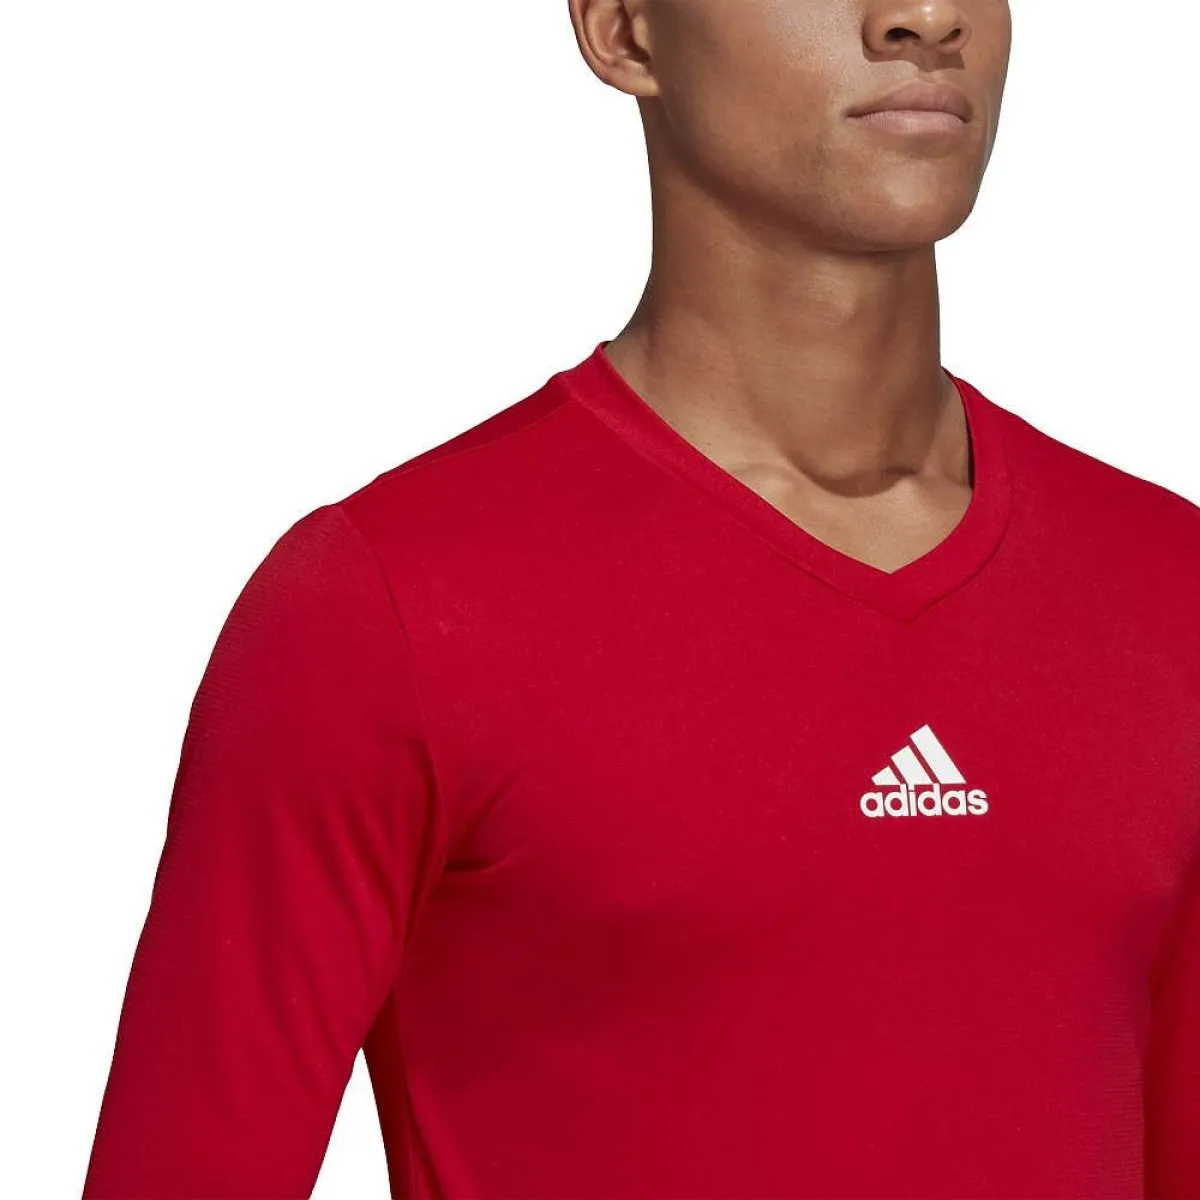 adidas T-Shirt langarm Team Base dunkel rot 13-ADIGN5674